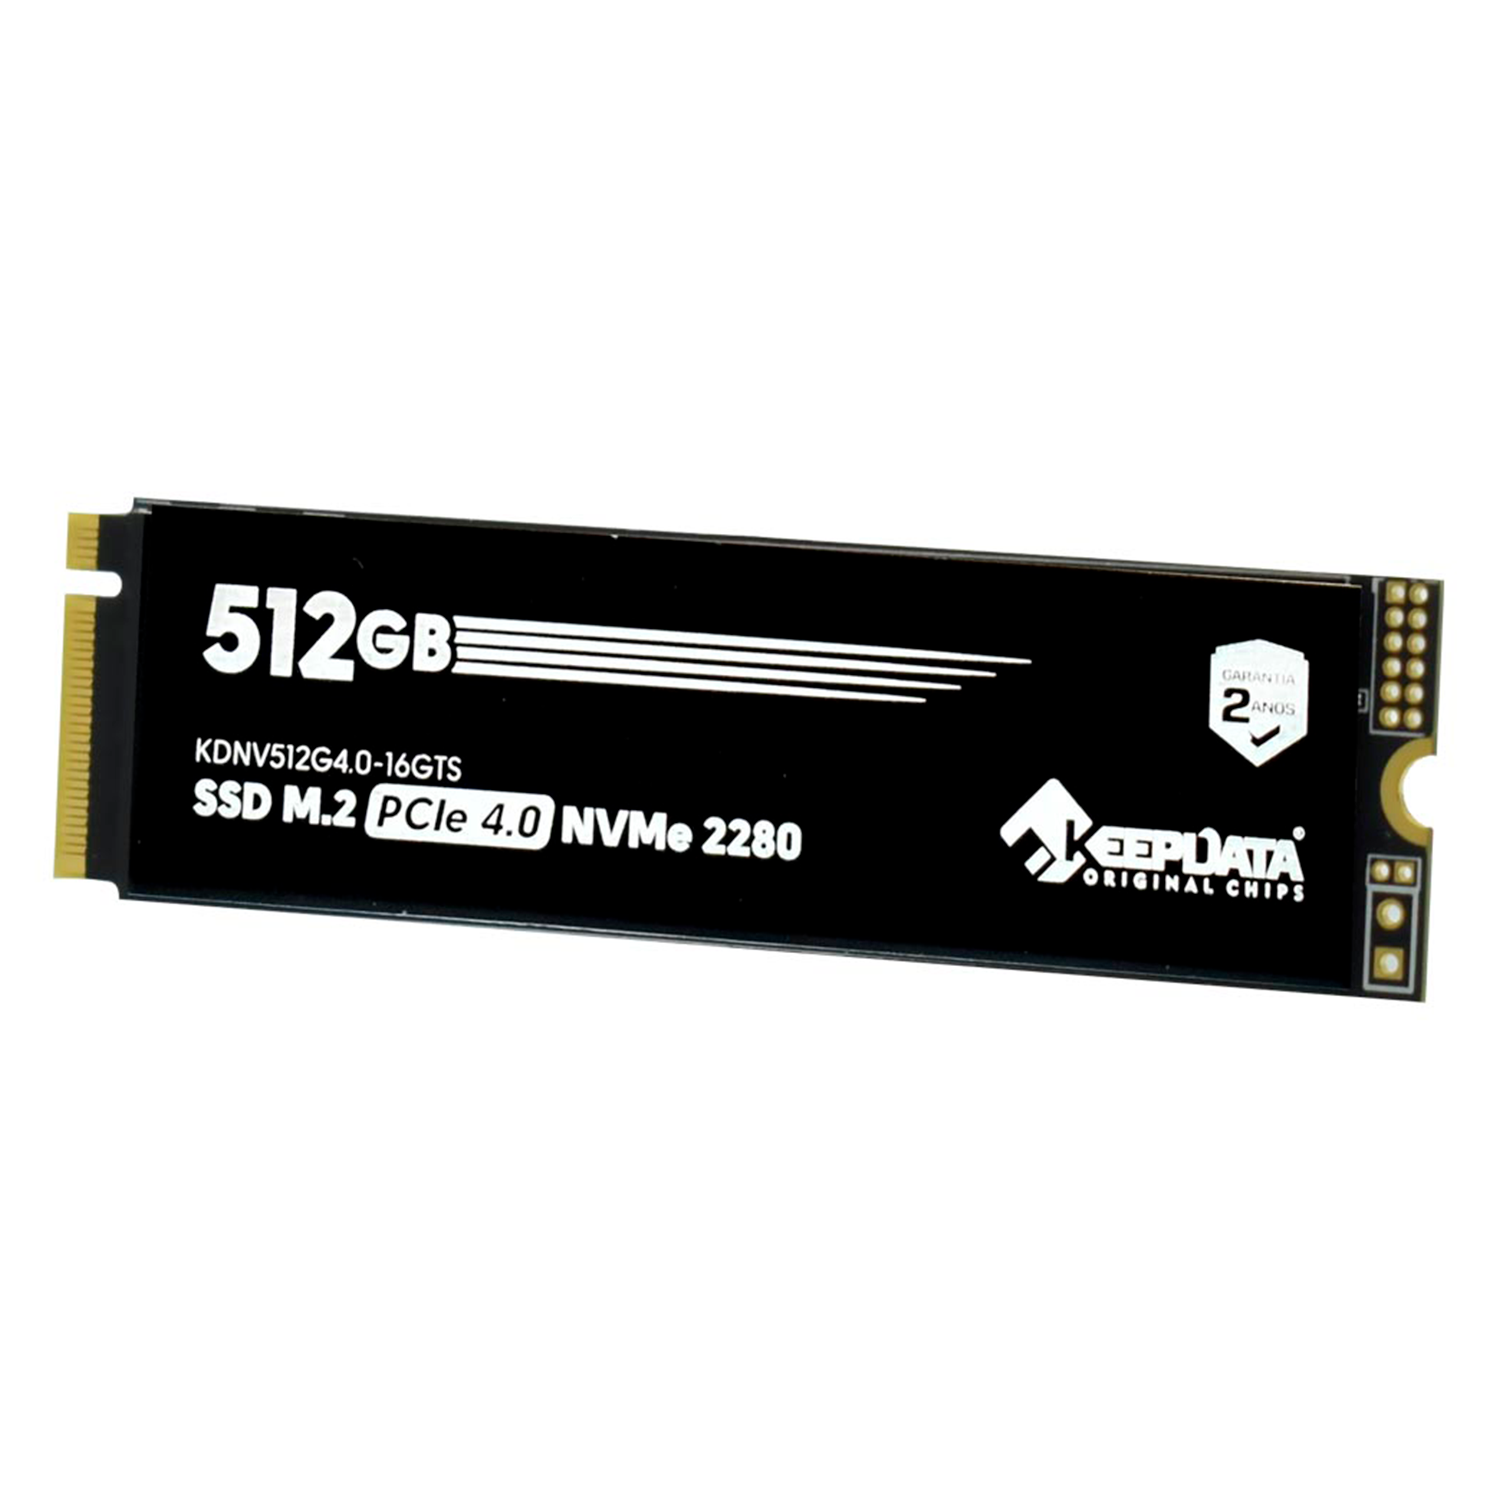 SSD M.2 Keepdata 512GB NVMe PCIe 4.0 - KDNV512G4.0-16GTS